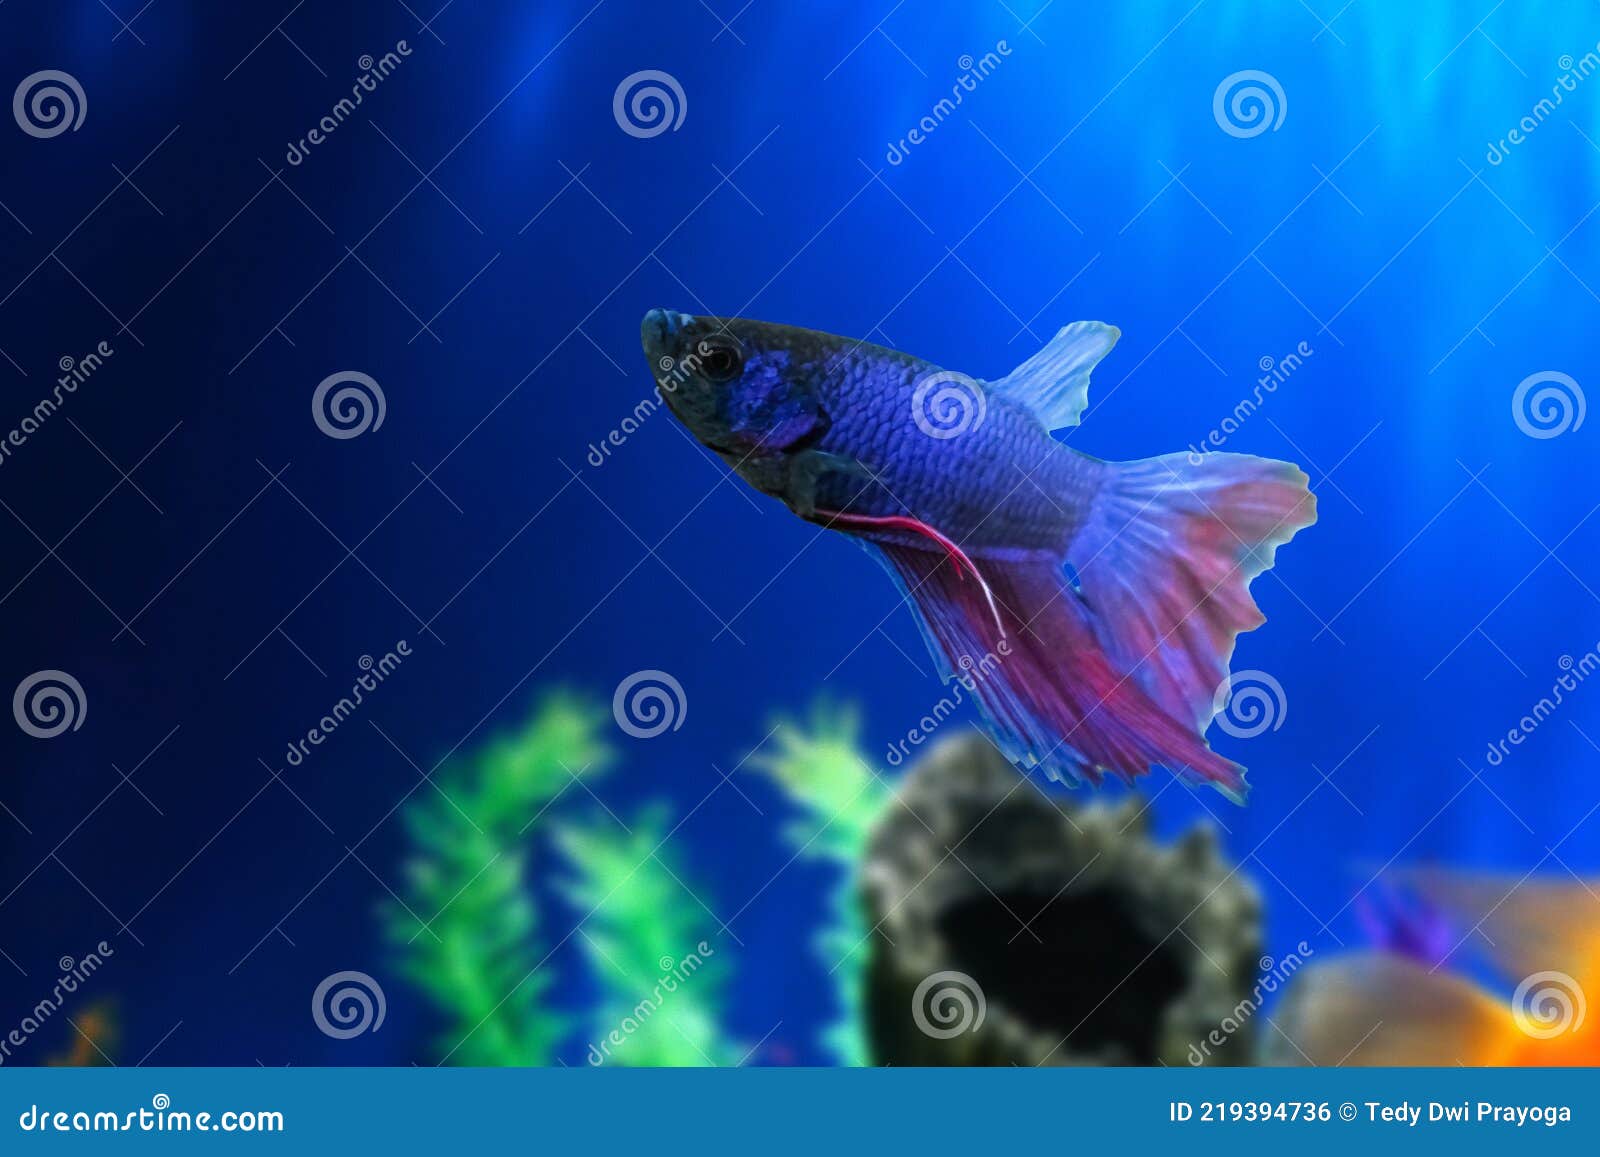 water animal concept: betta fish underwater in aquarium against a backdrop of green algae. betta splendens. multi-color fancy